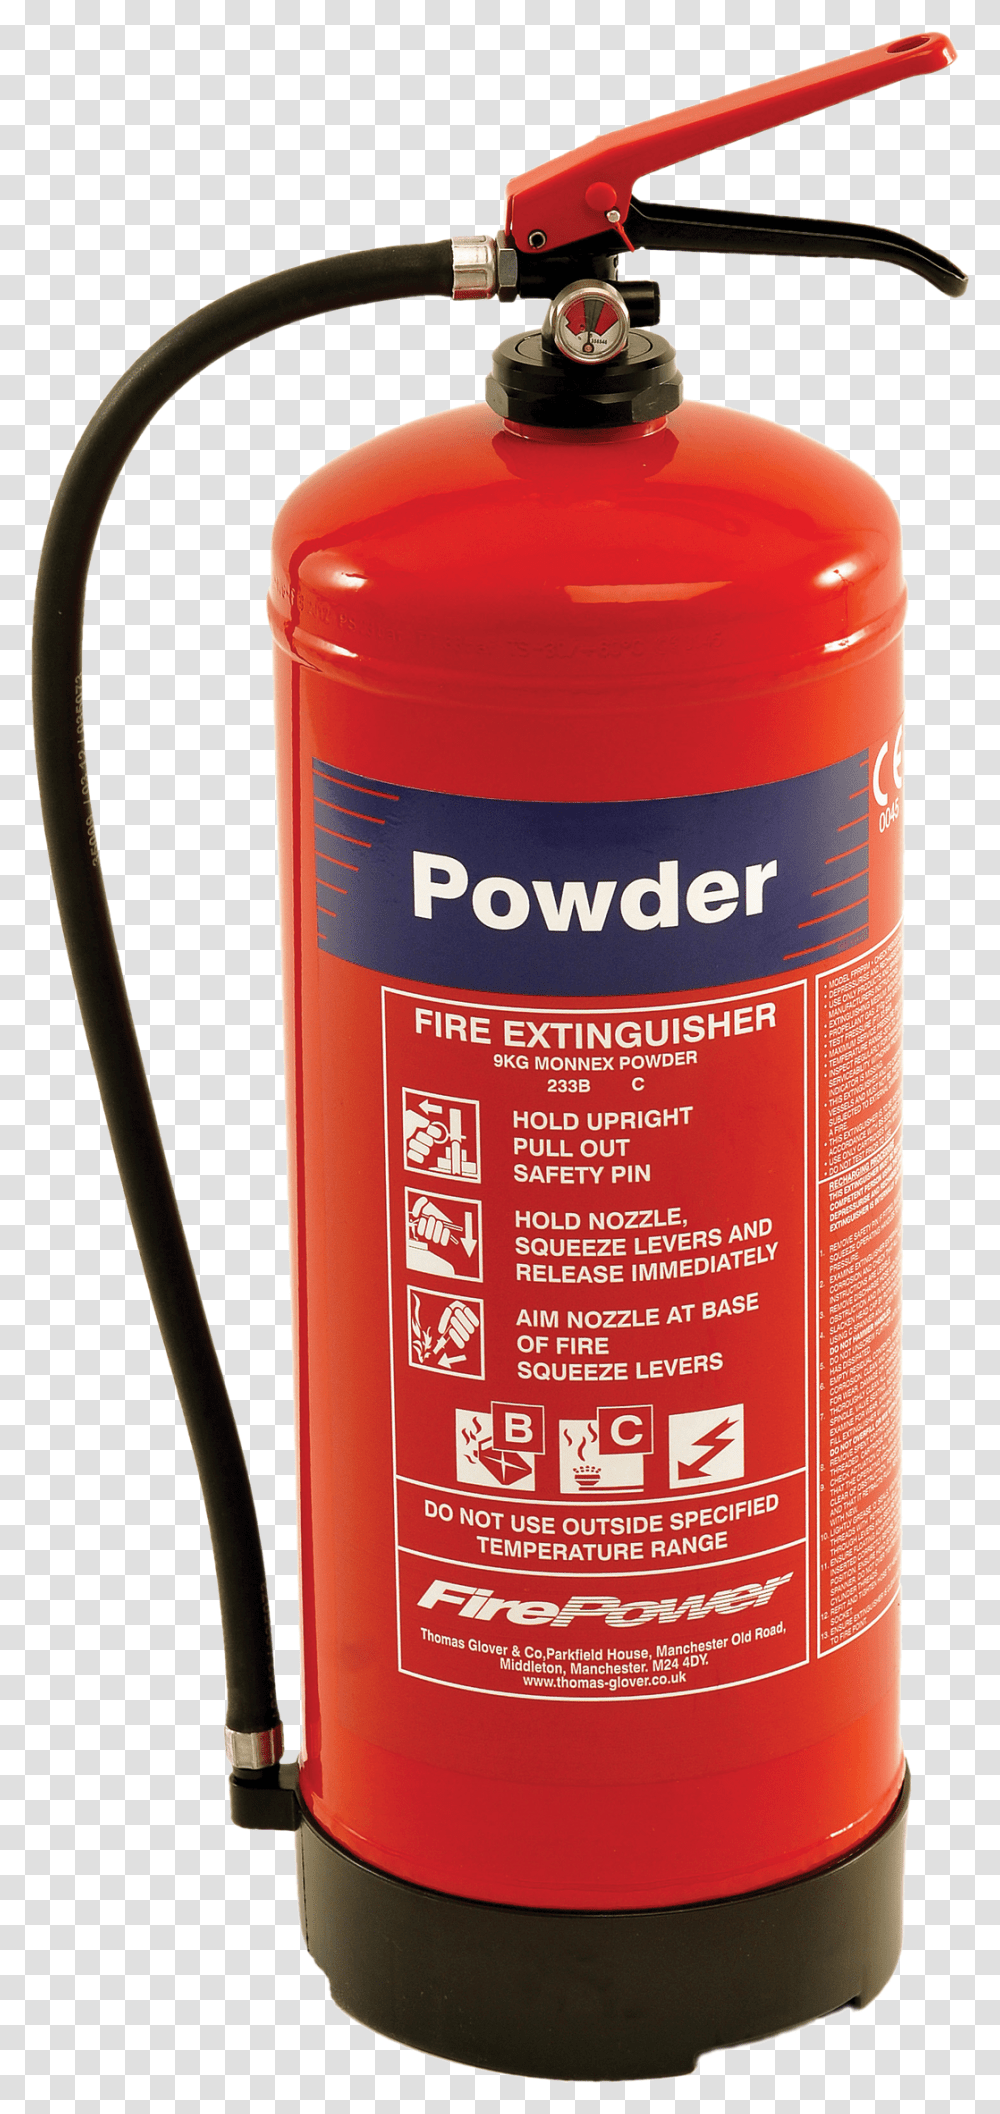 Fire Extinguisher Fire Extinguisher Powder, Gas Pump, Machine, Bottle, Paint Container Transparent Png